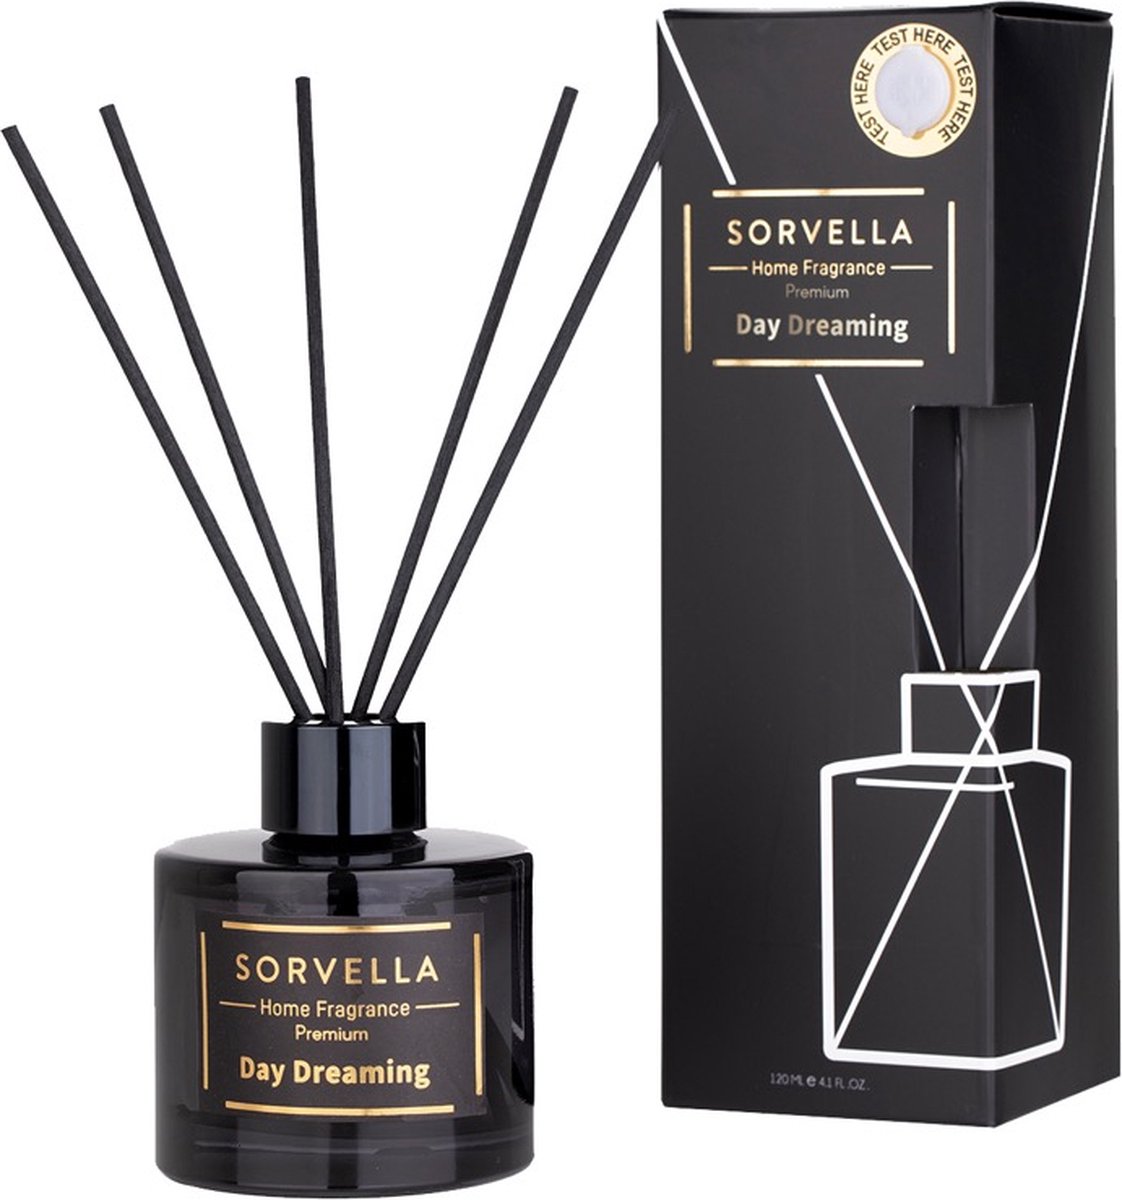 Sorvella - Home Fragrance Premium Day Dreaming - 120ml